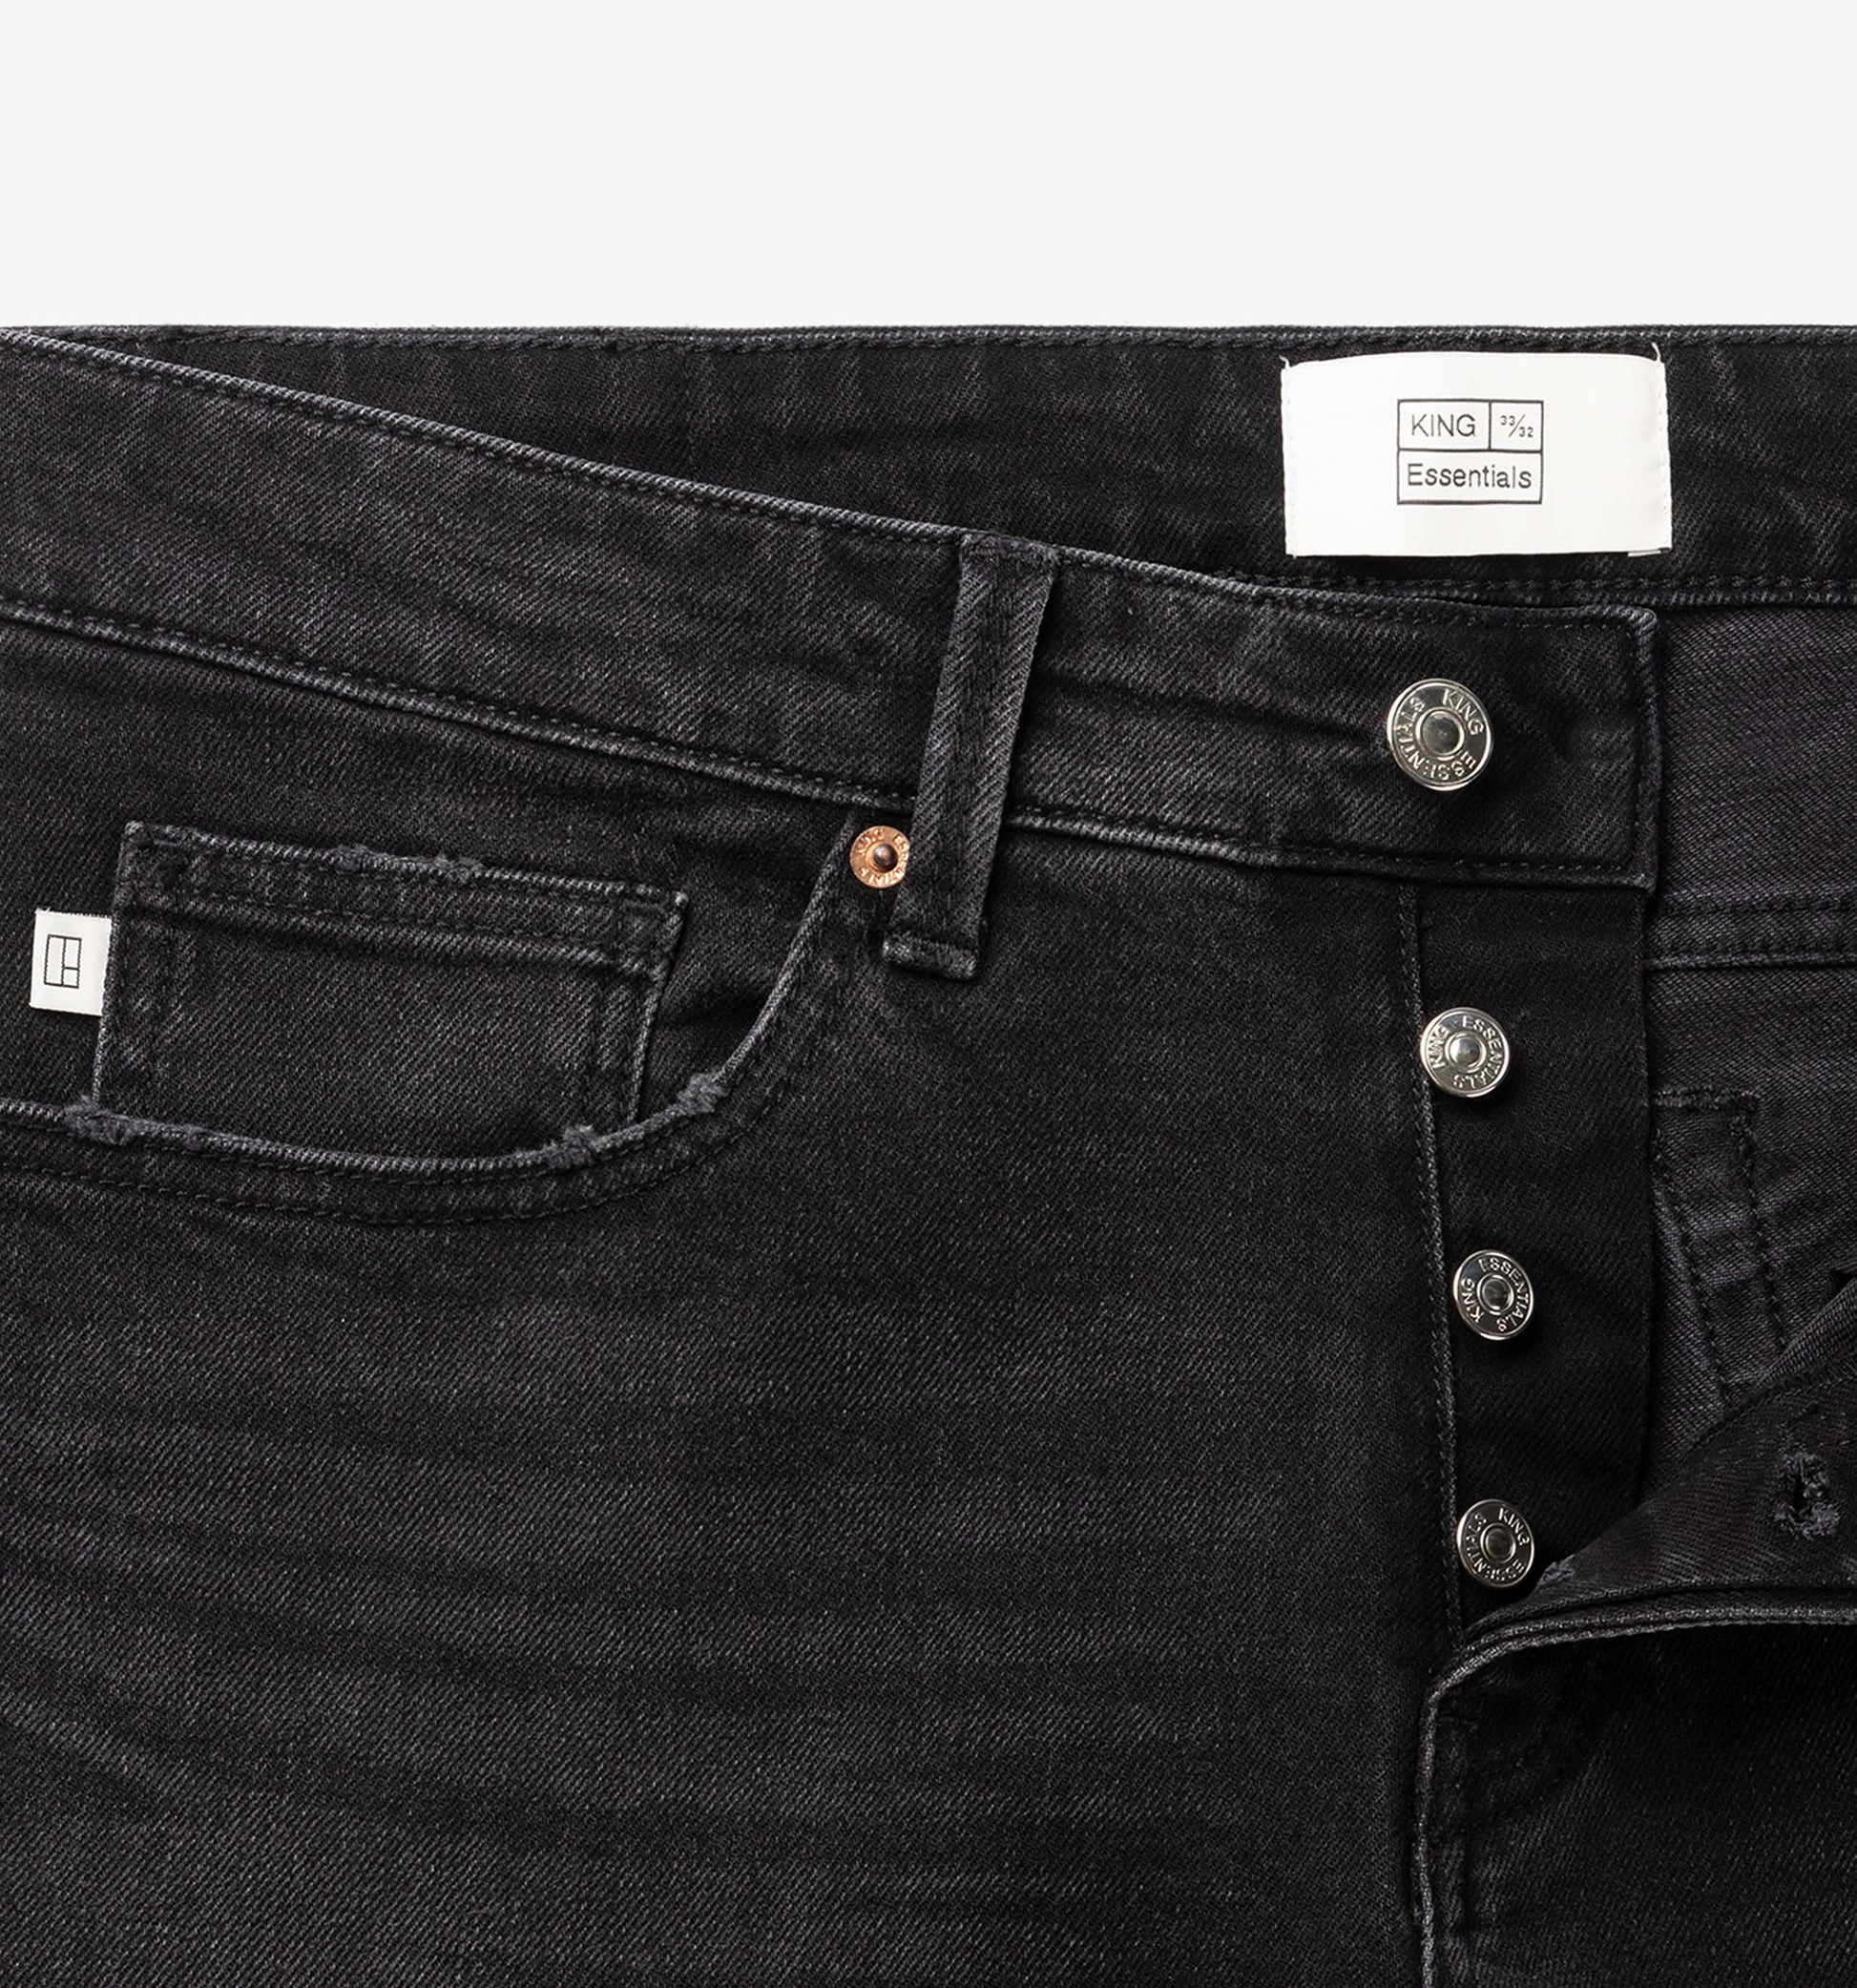 The Jason - Cotton-Stretch Black Wash Jeans, Black